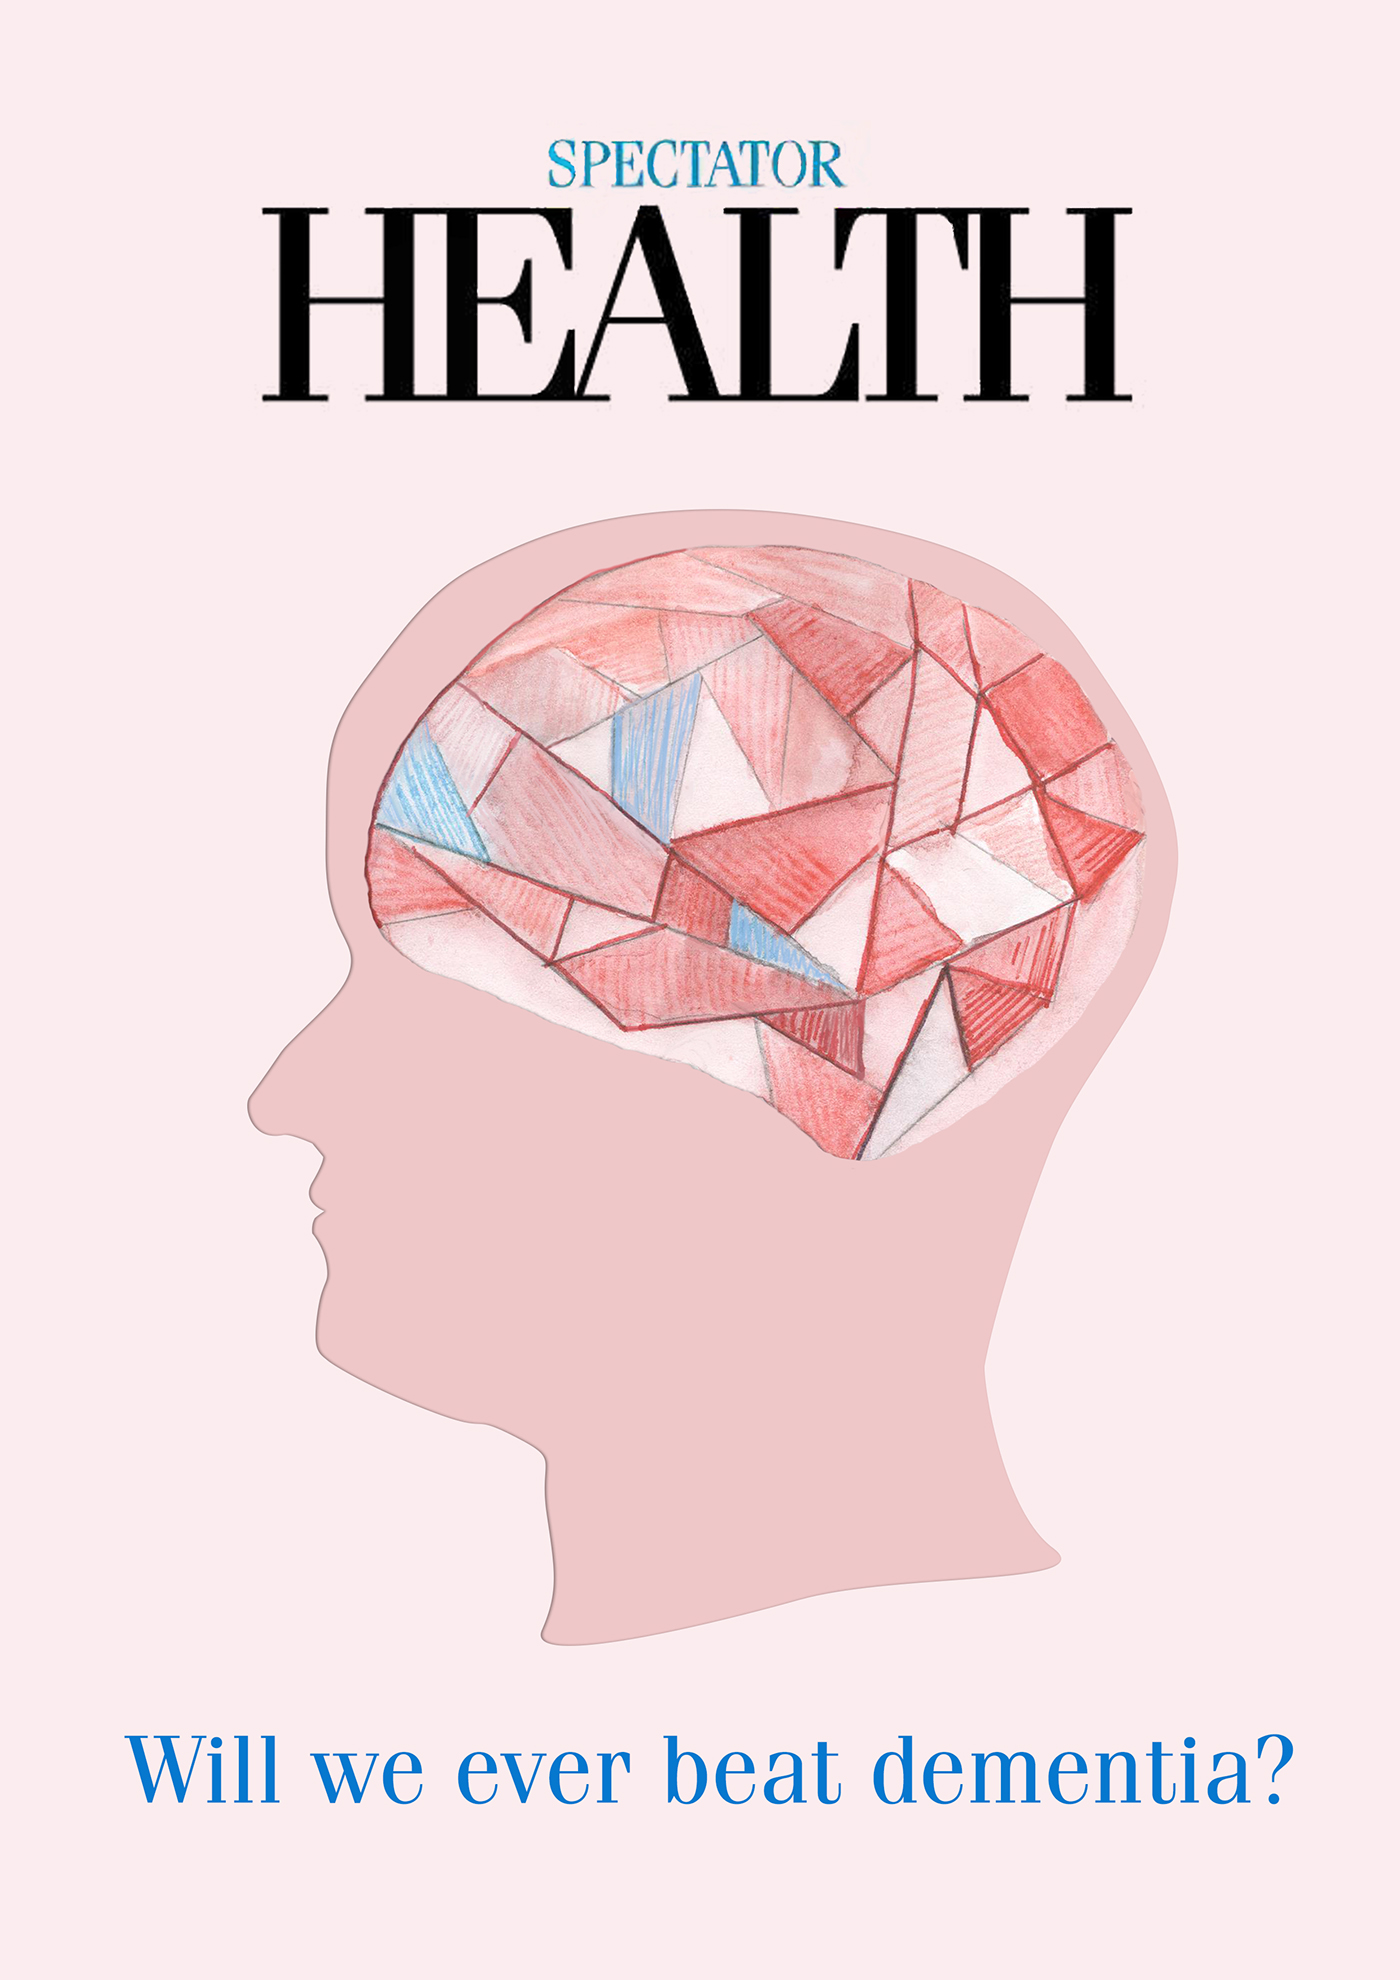 dementia cover magazine Health spectator